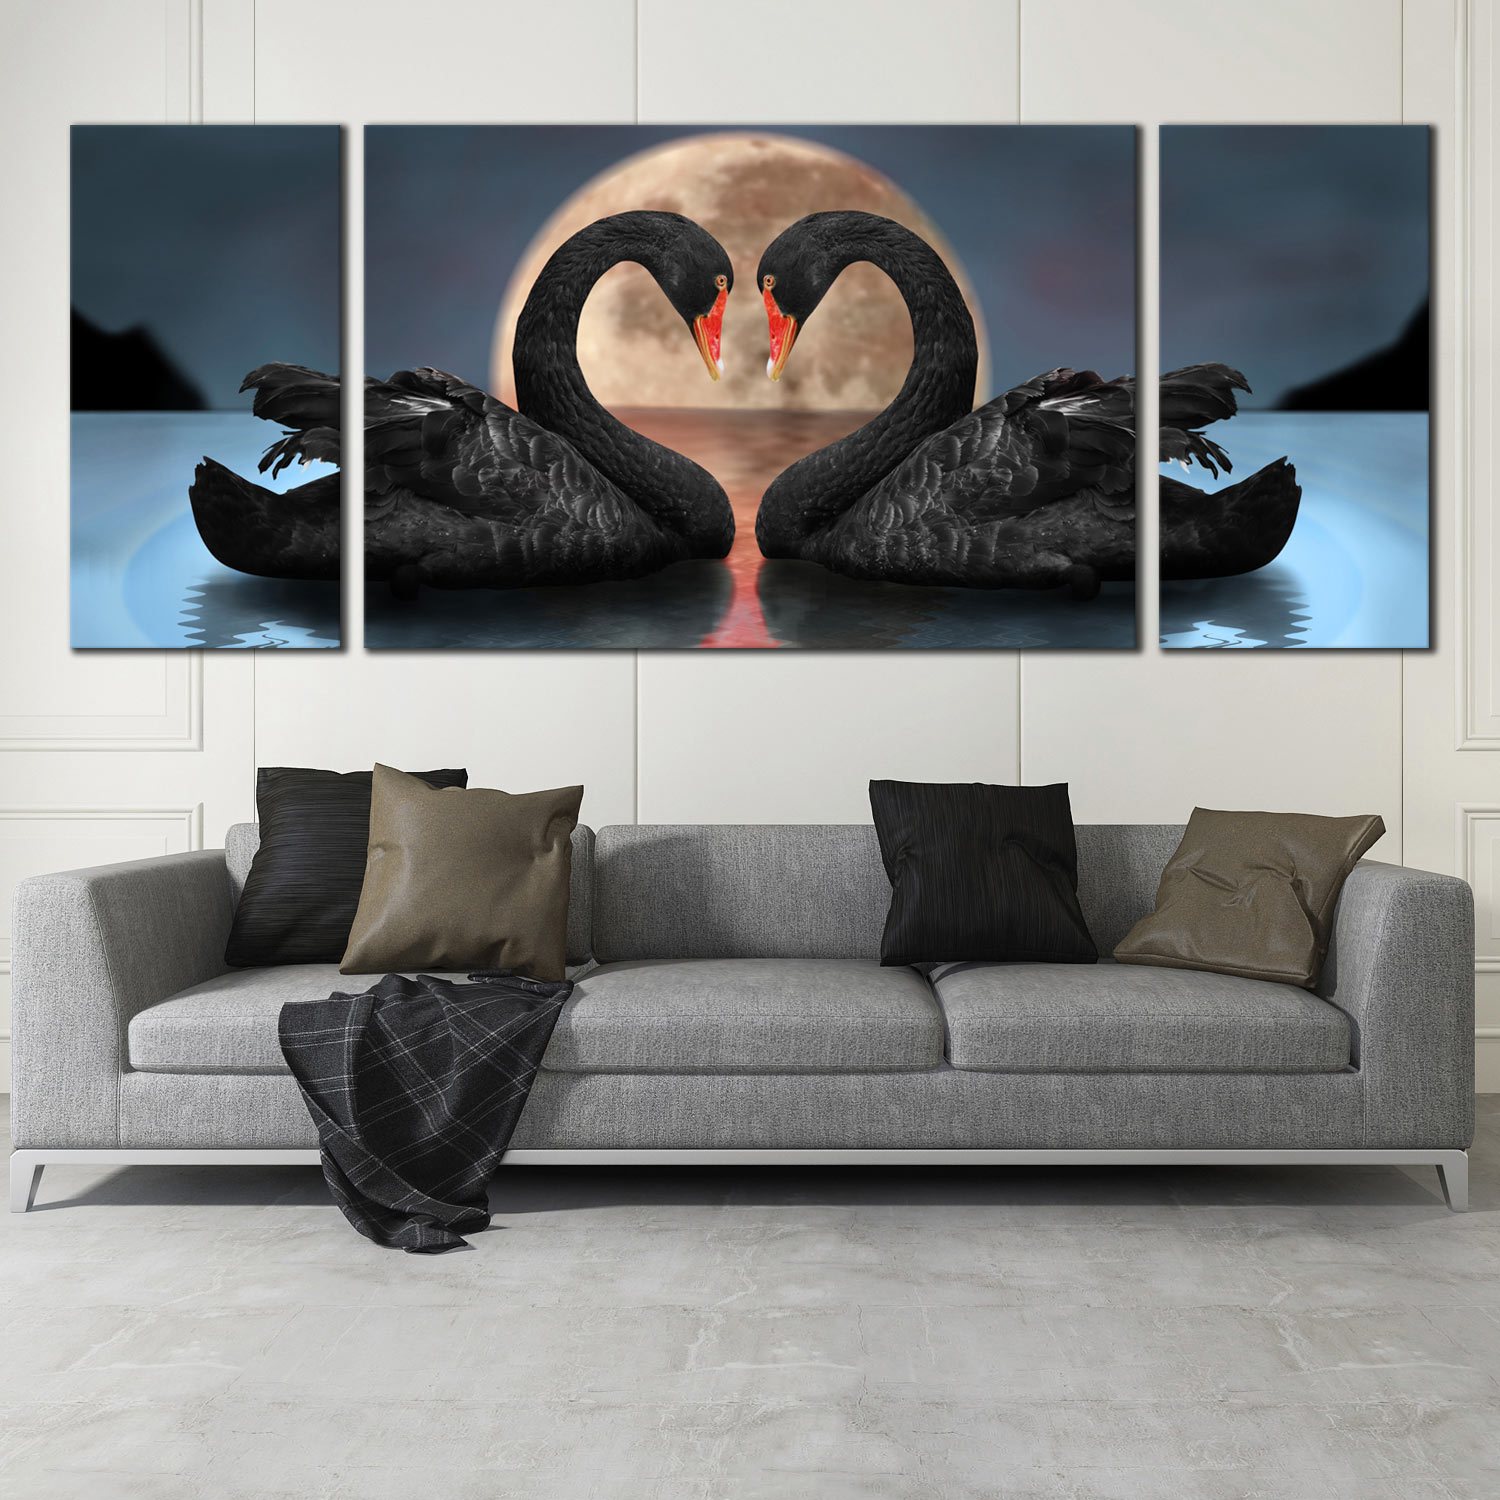 Art Print Home Decor Wall Art Poster E Romantic Swan Couple 